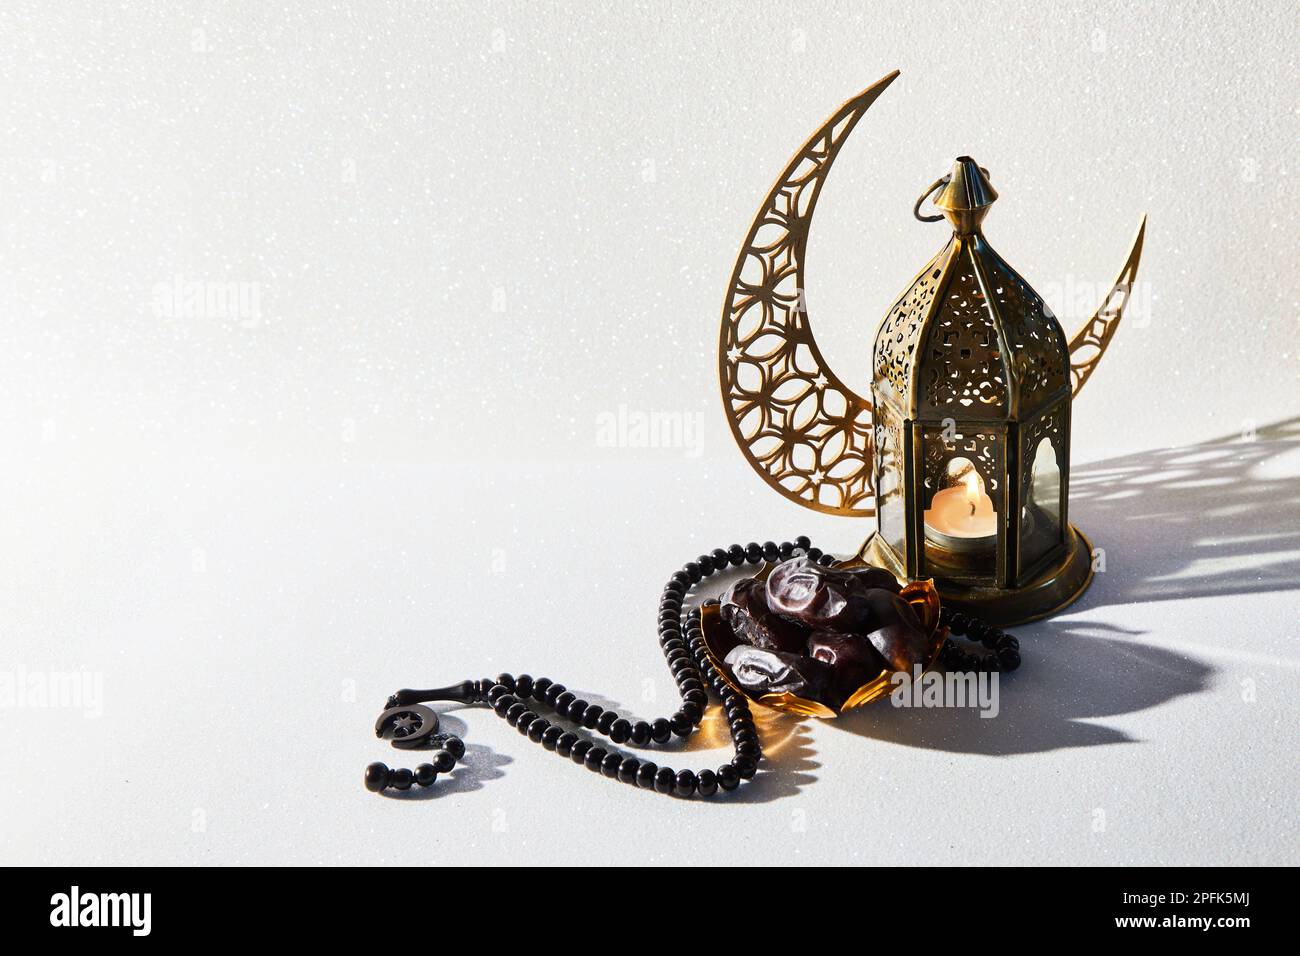 Mese Santo musulmano Ramadan Kareem - Lanterna araba ornamentale con candela bruciante. Foto Stock